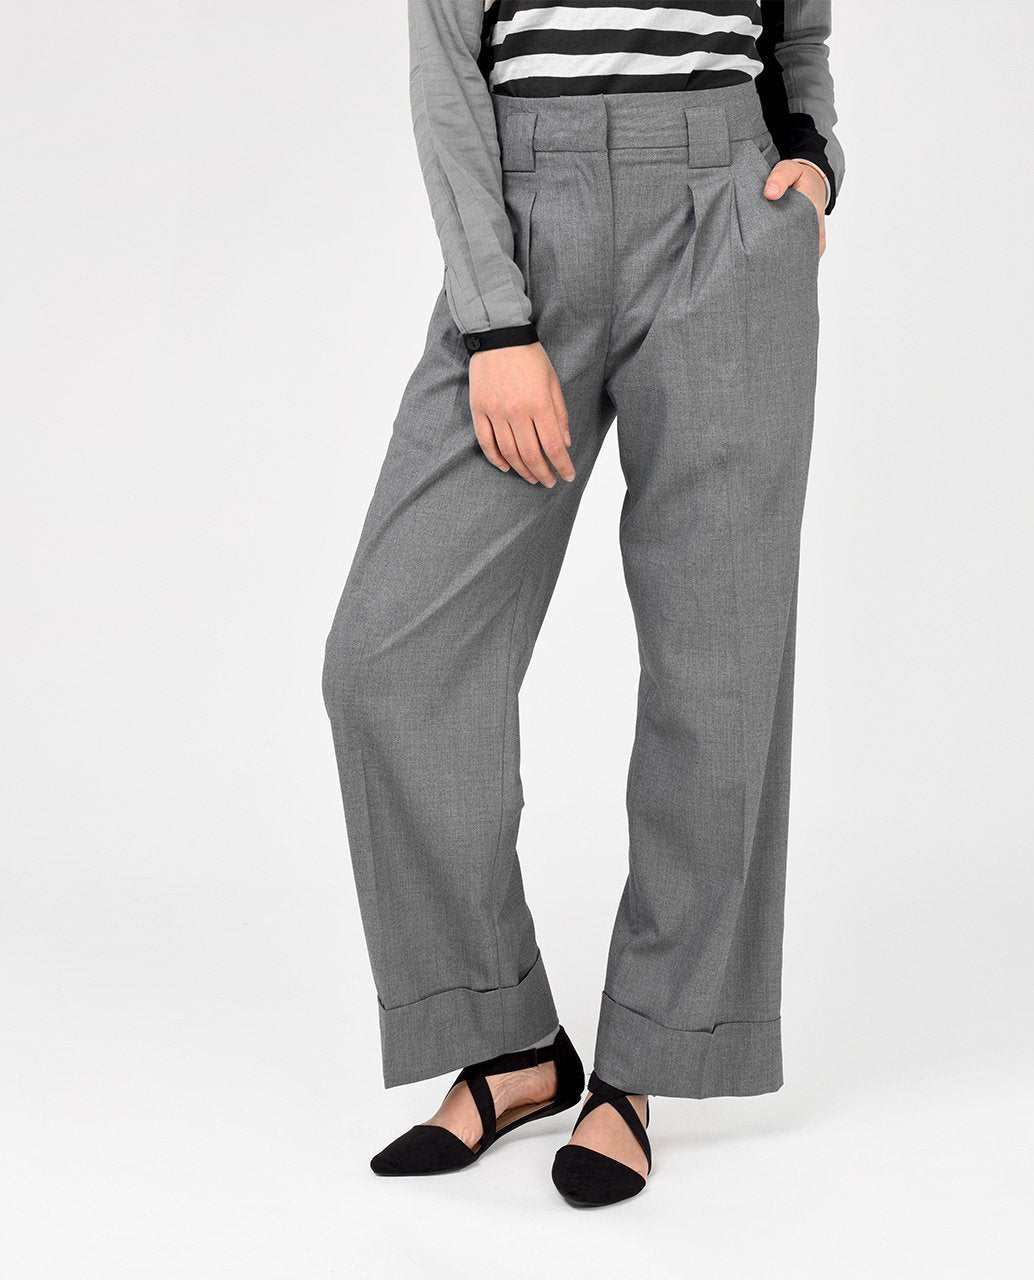 Charcoal Grey Trousers Slim Petite (W28 L28) Charcoal Grey 